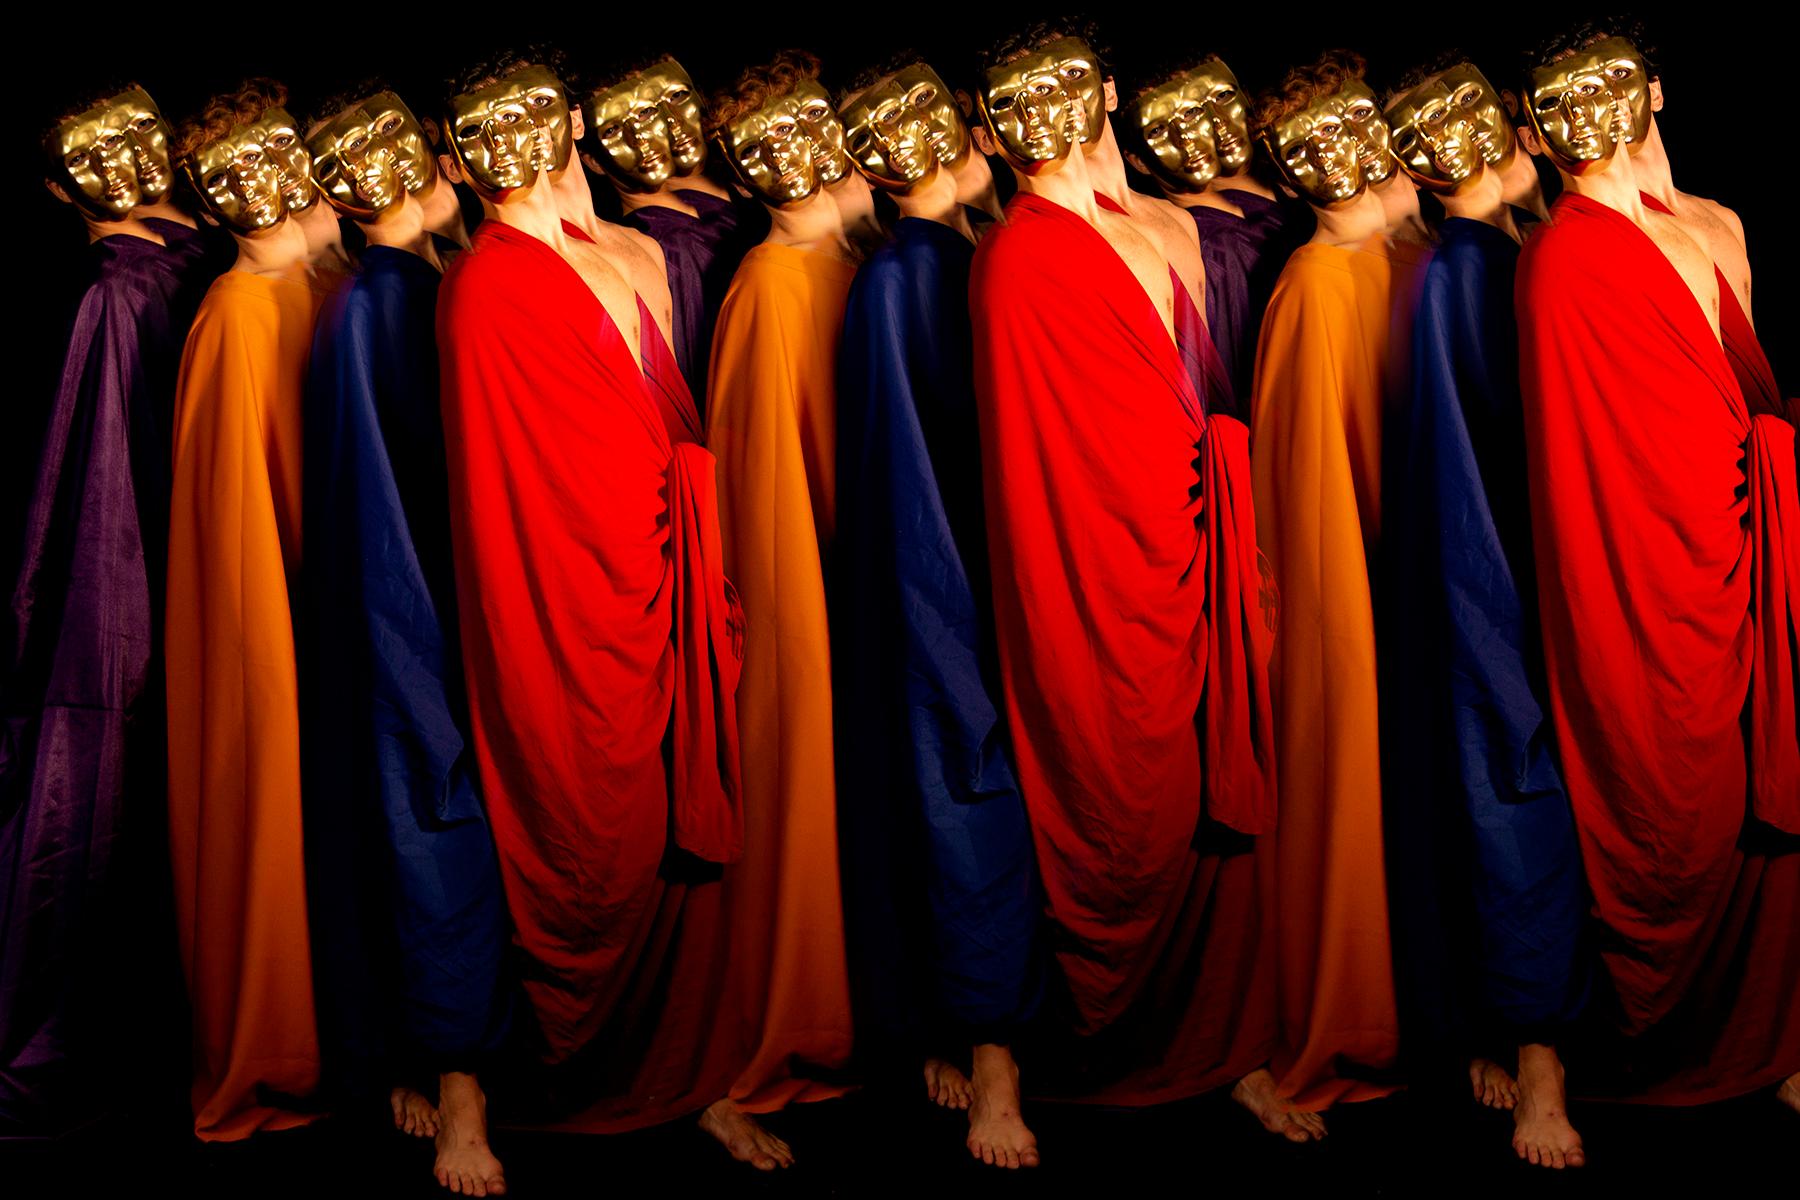 Ricky Cohete Figurative Photograph - Caballeros de Oro. The series danza de las naranjas. Figurative Color photograph